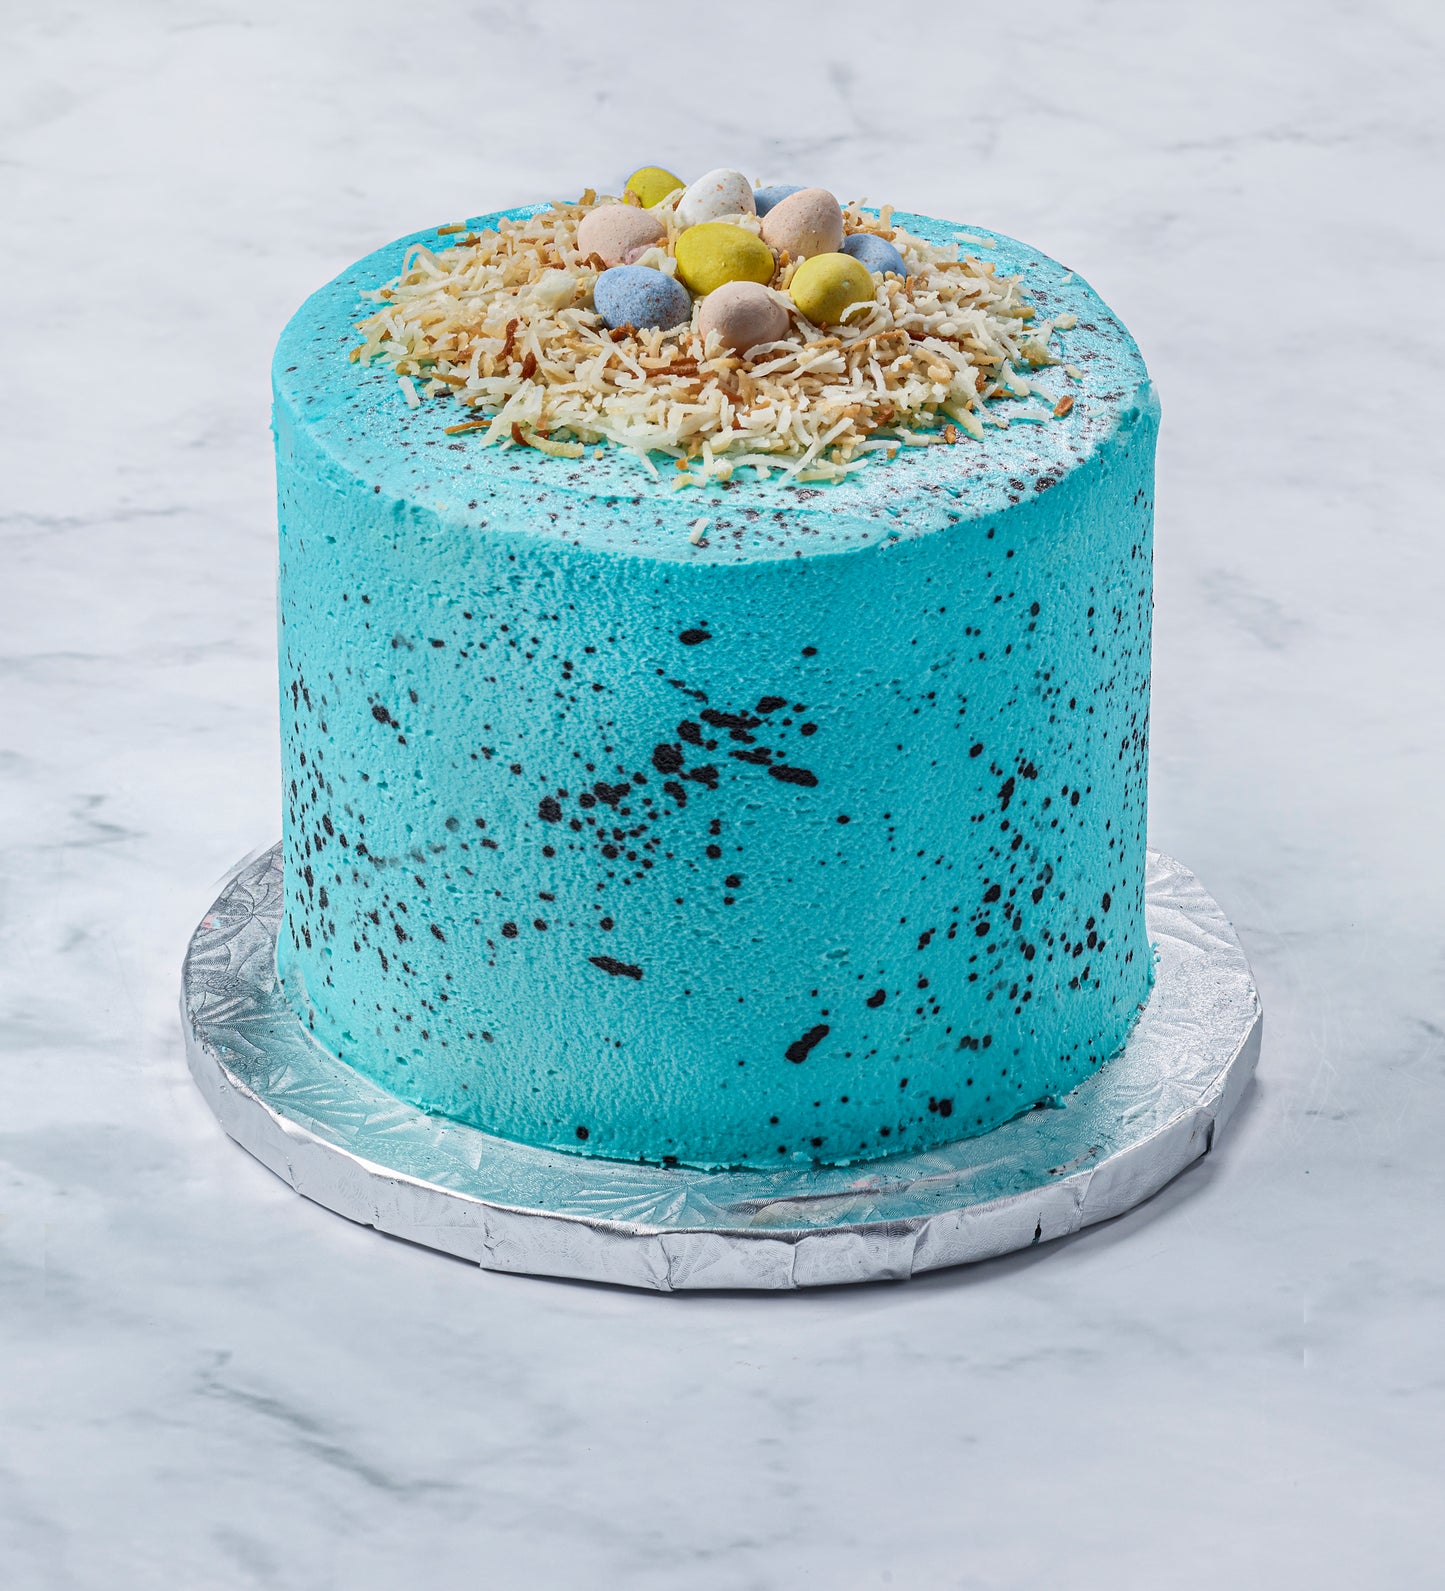 Robin's egg blue speckled cake